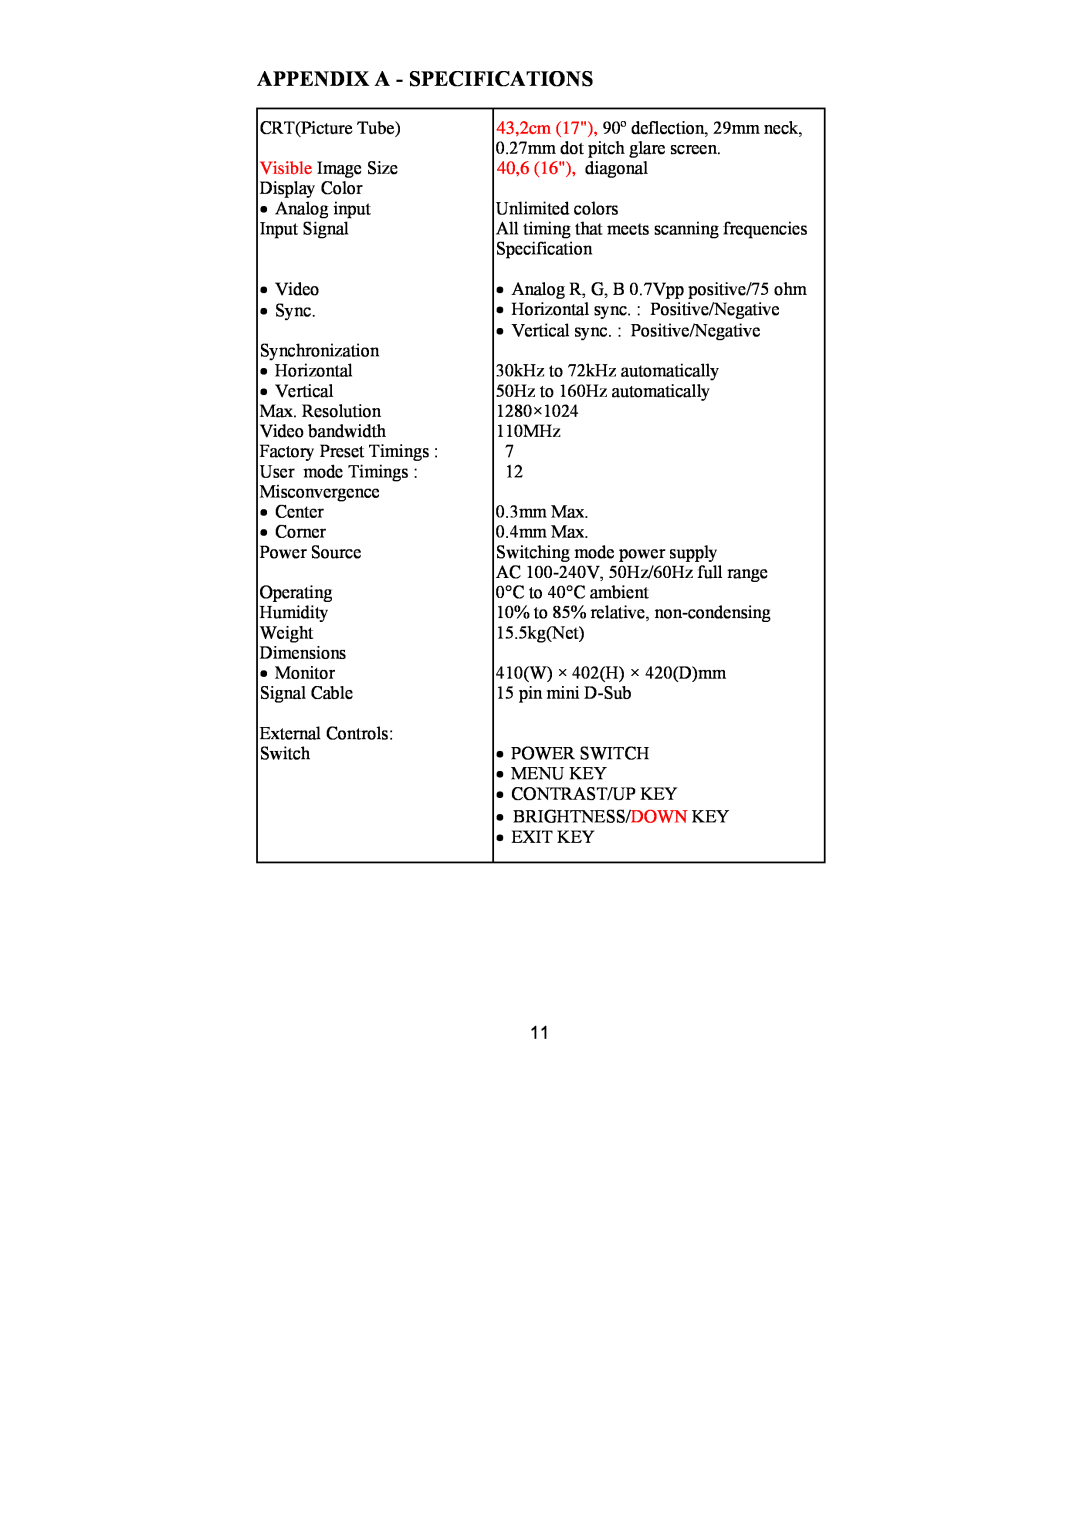 Philips 107E69 manual Appendix A - Specifications, 40,6 16, diagonal 